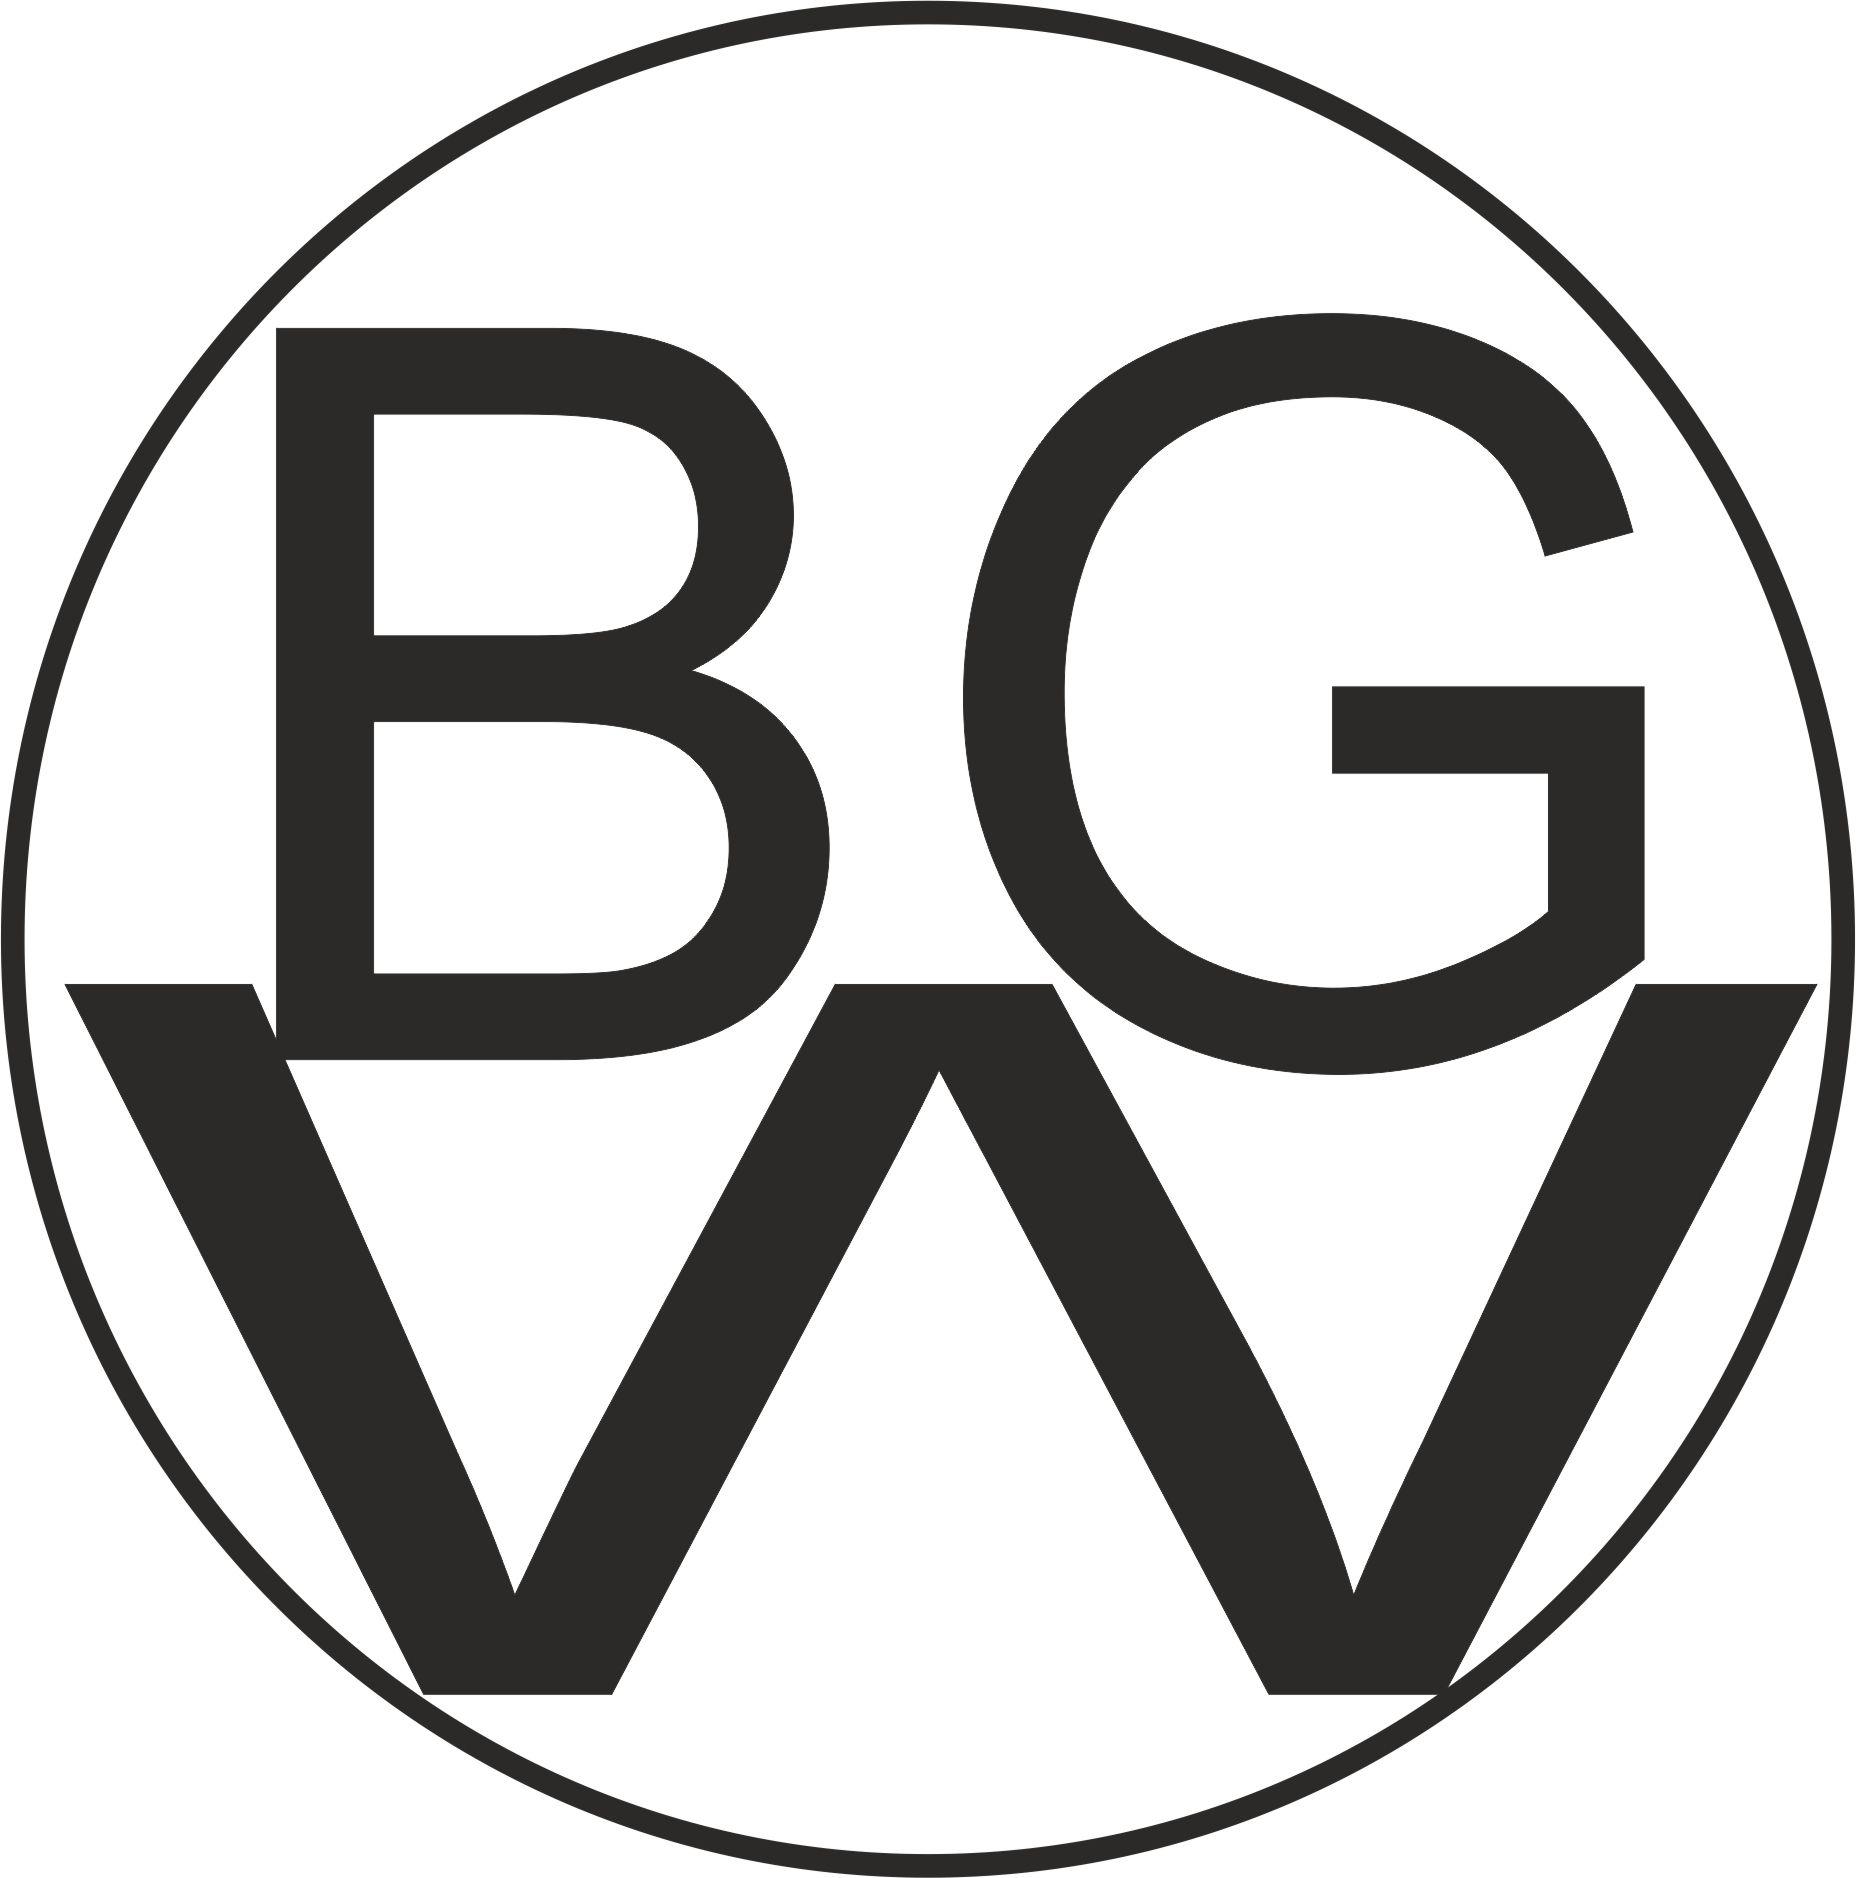 Bgw Logo - Beautiful Game Watches, A New Swiss Watch Brand